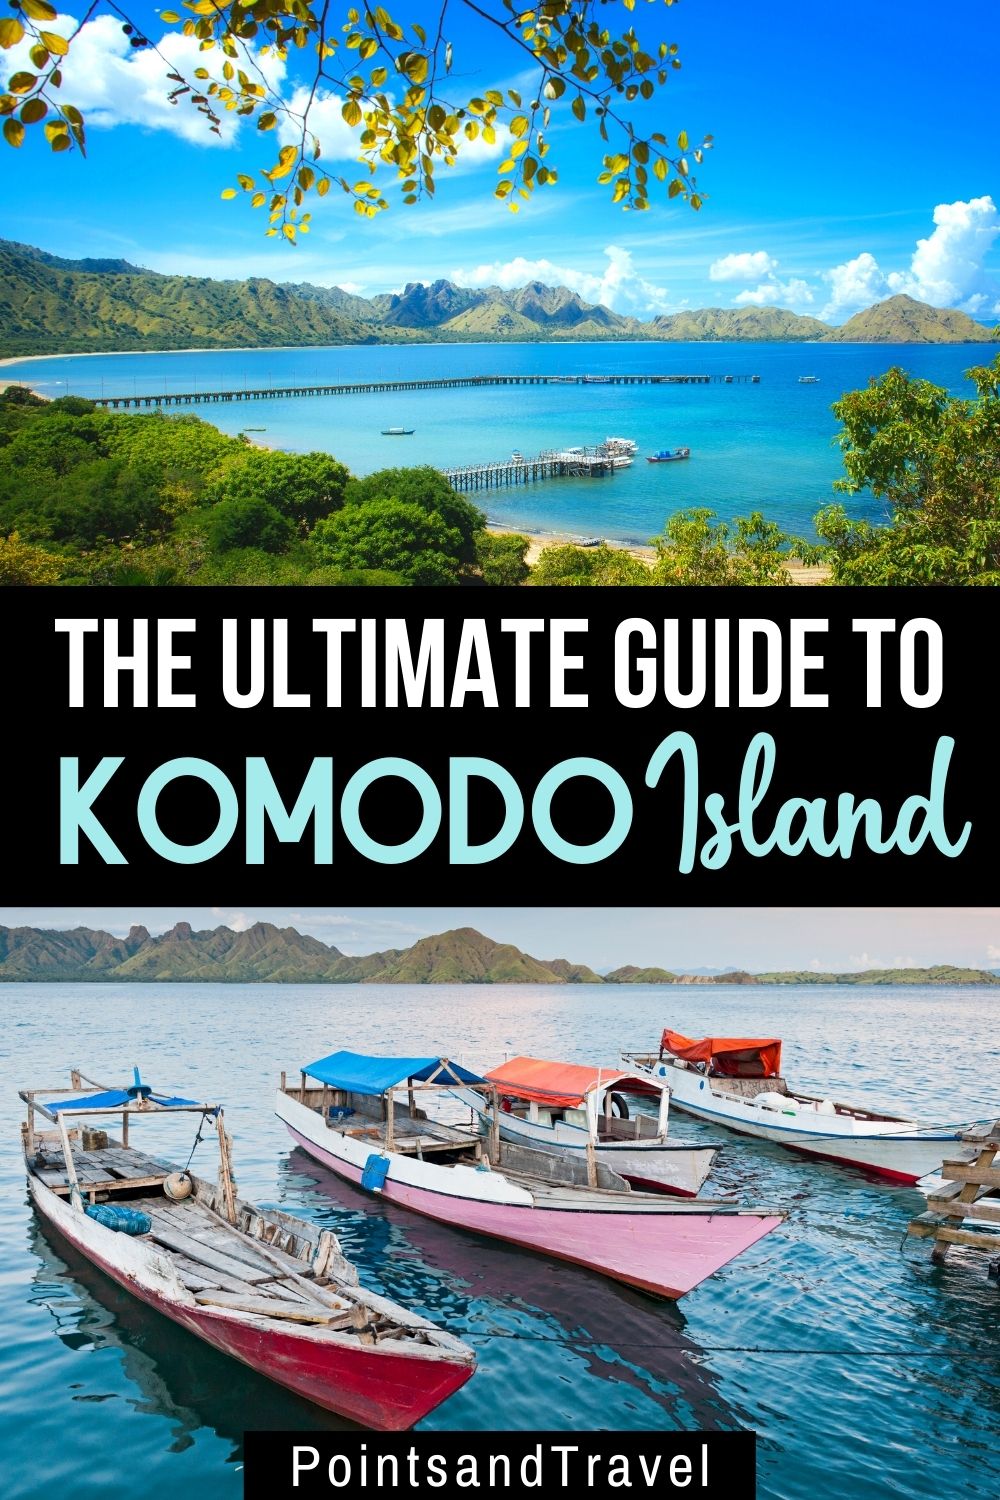 Komodo dragon, Komodo, Komodo island, Pictures of Komodo dragons, komodo dragon island